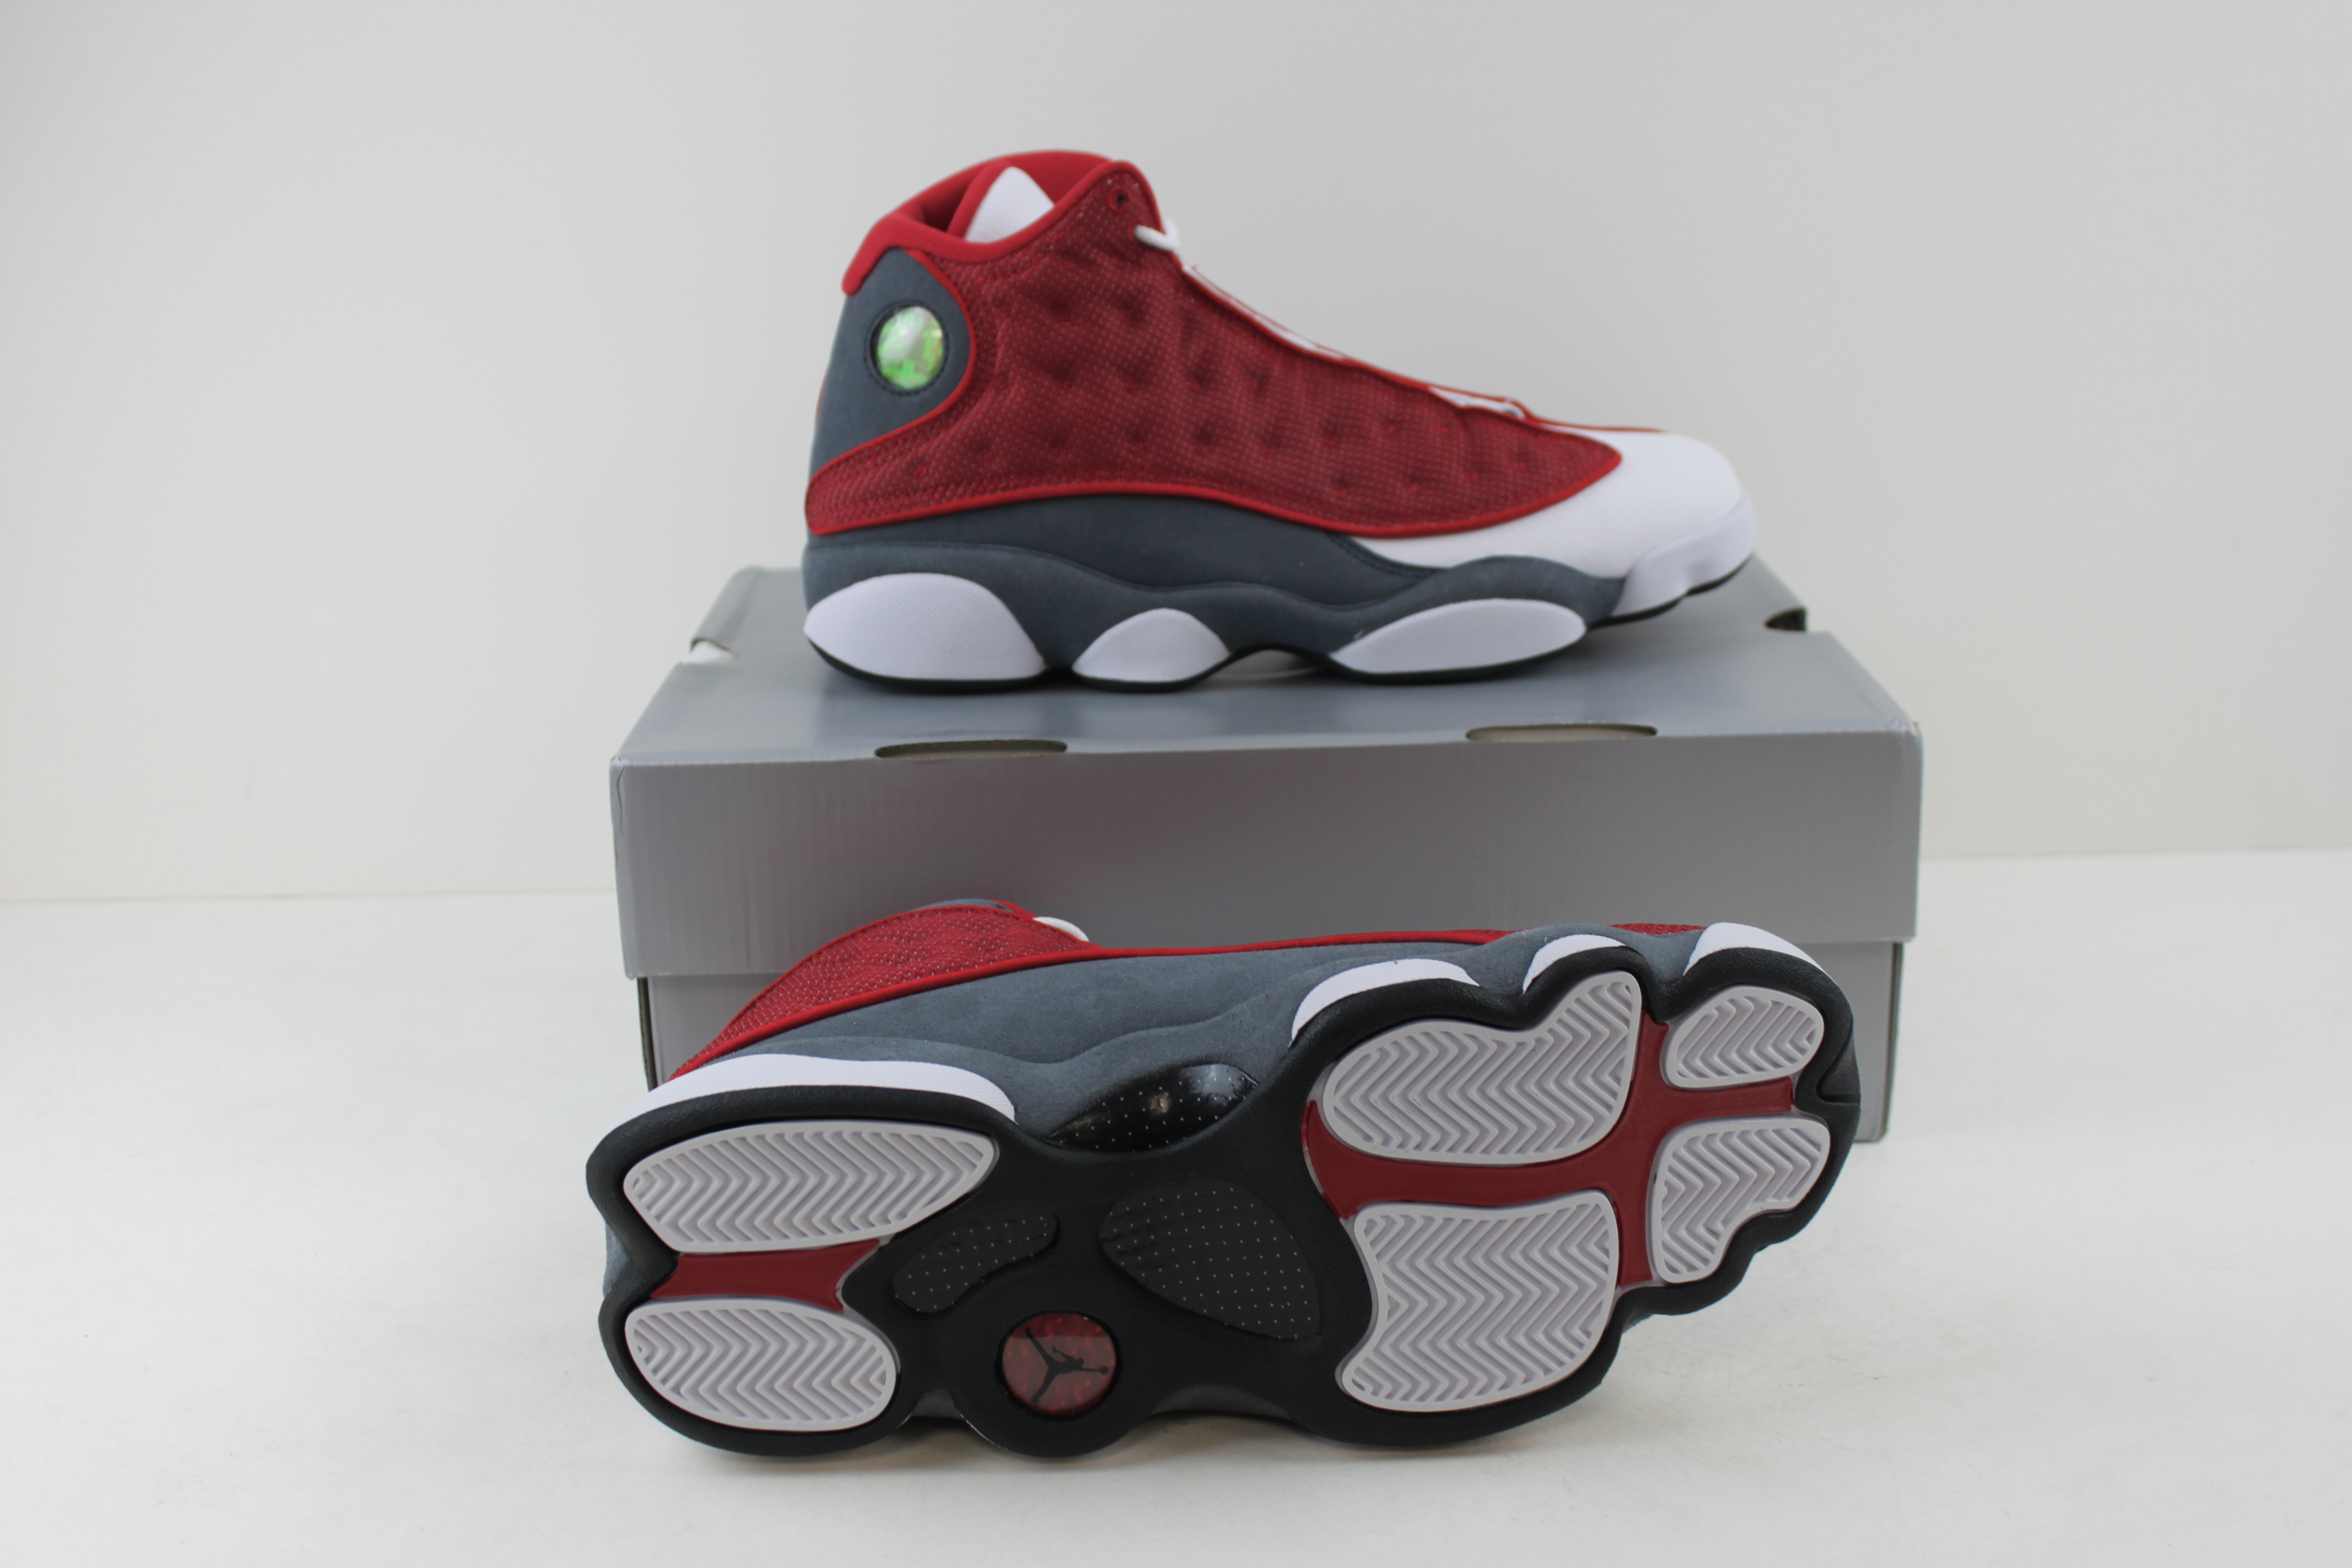 Nike Men's Air Jordan 13 Retro Trainers, Red, White, Grey and Black, UK 8 - Image 2 of 2